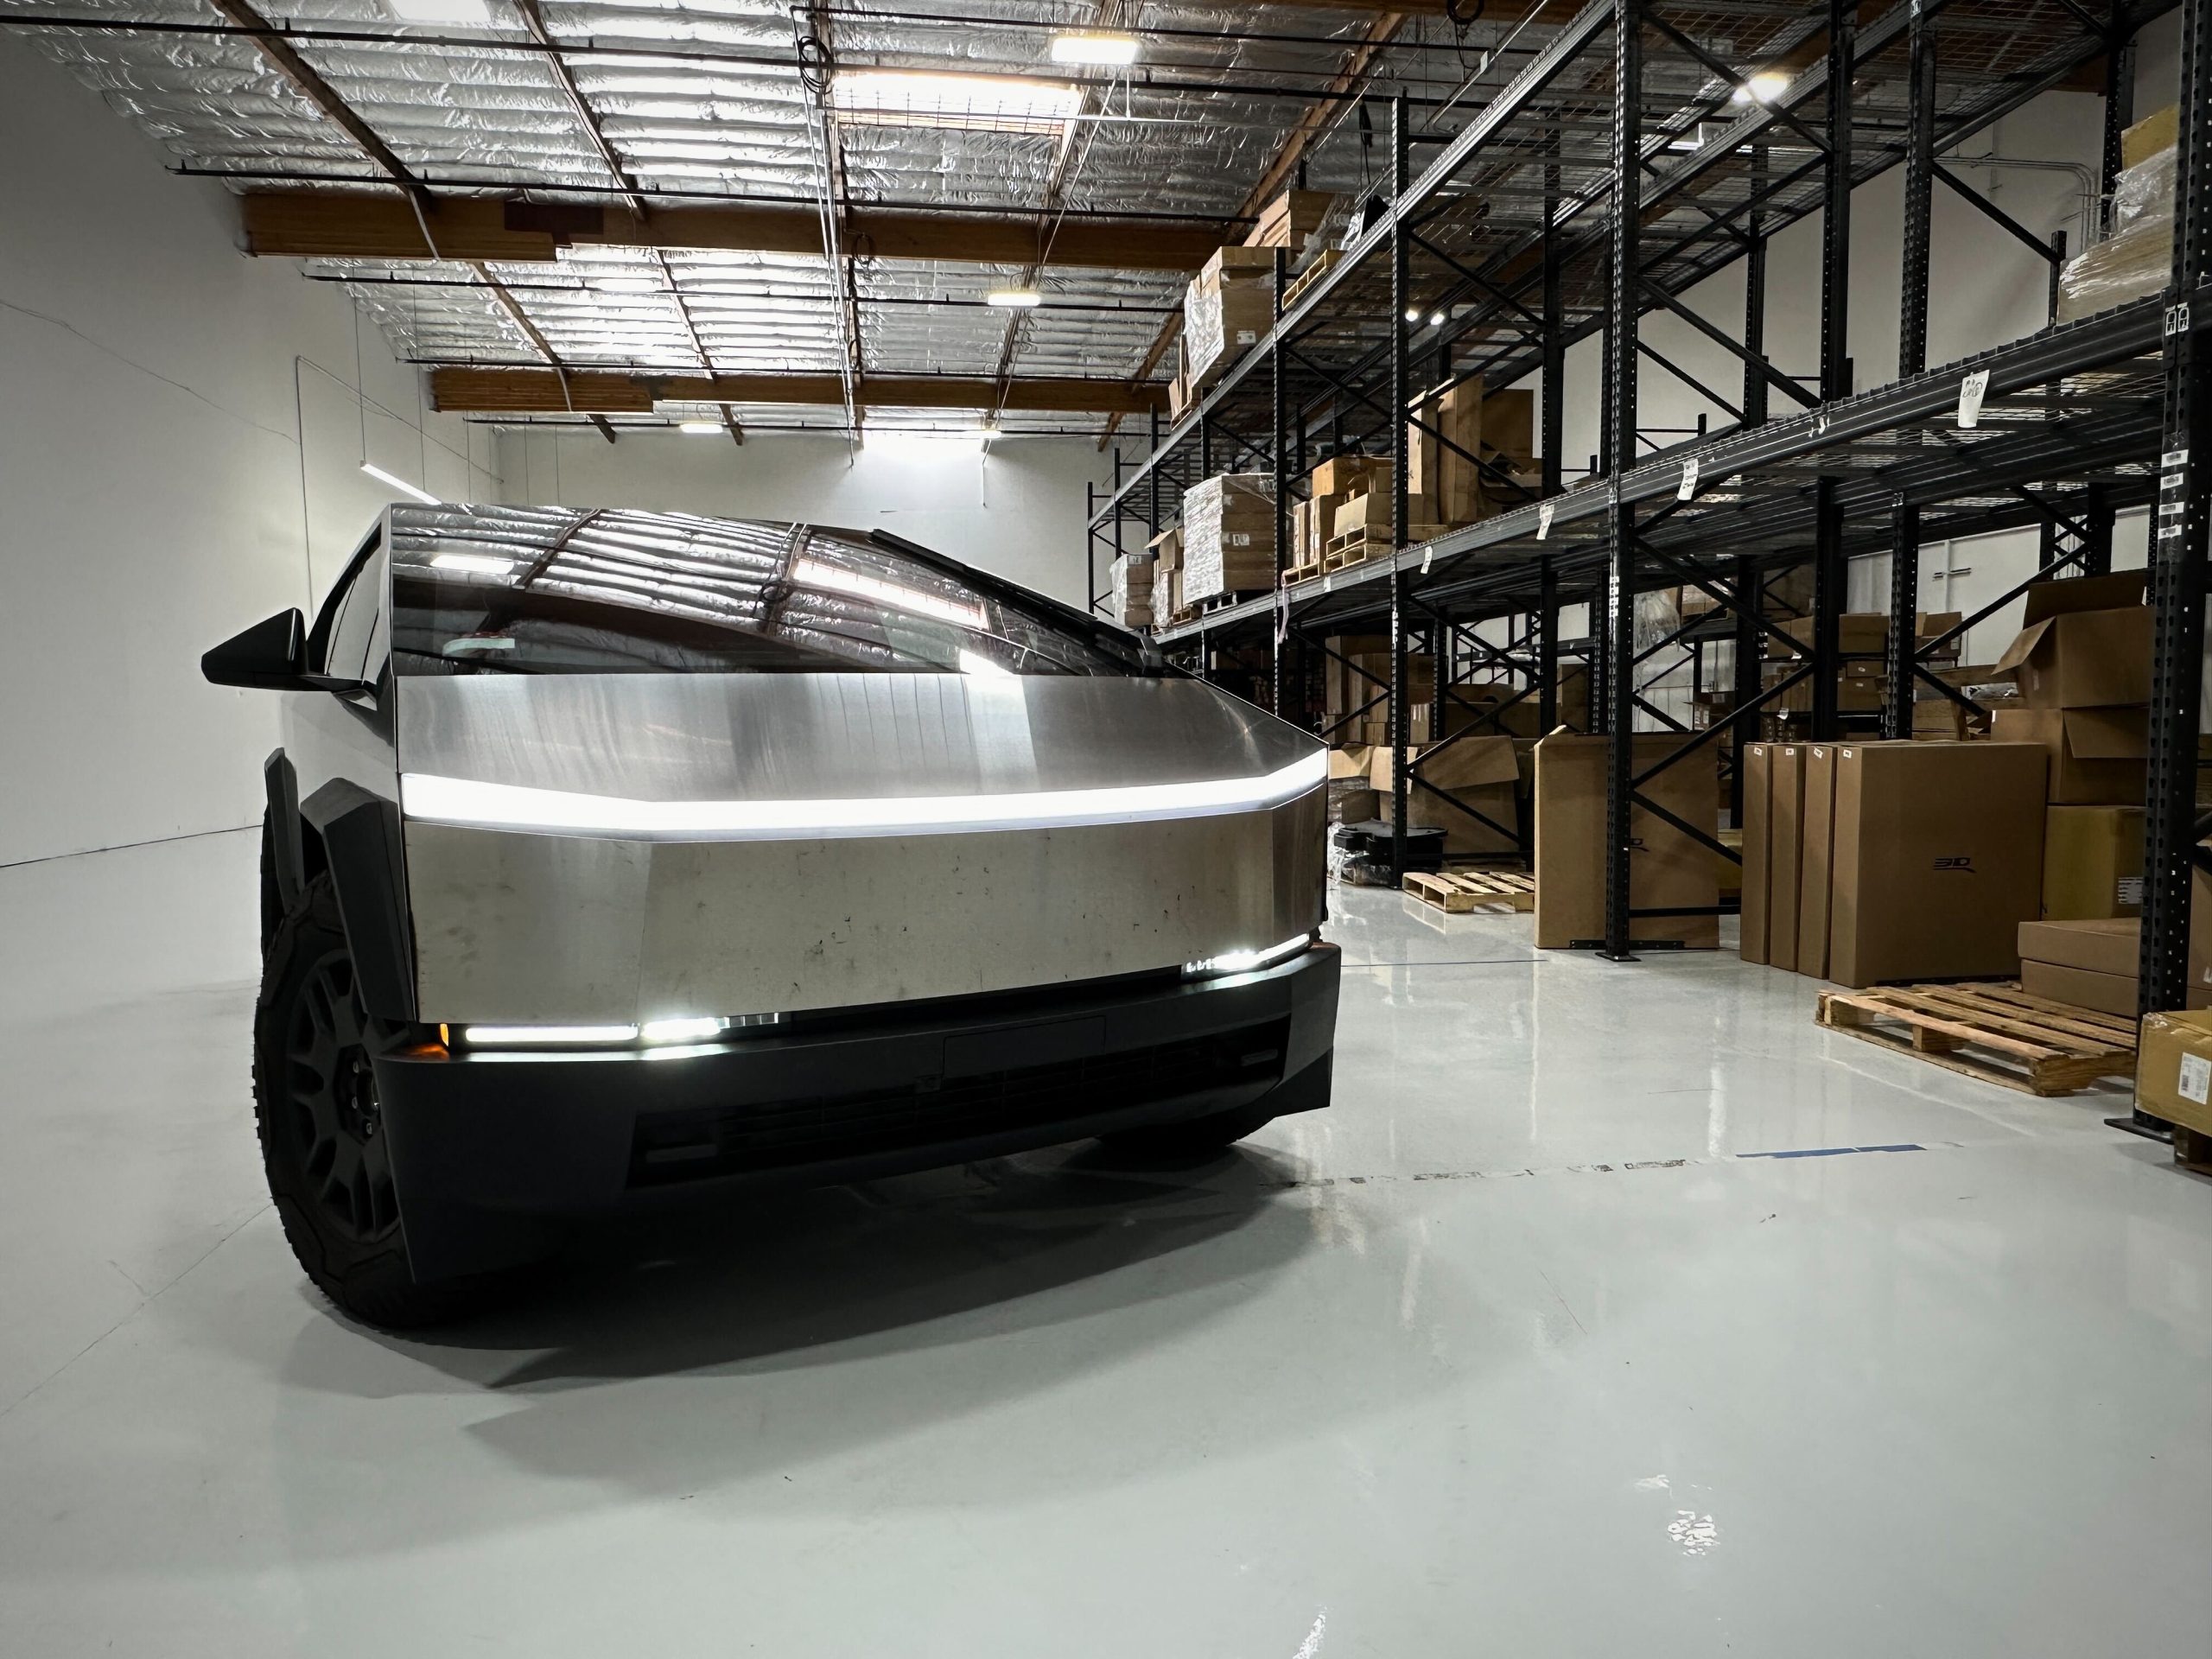 Tesla Cybertruck Will Get Full Self-Driving Soon